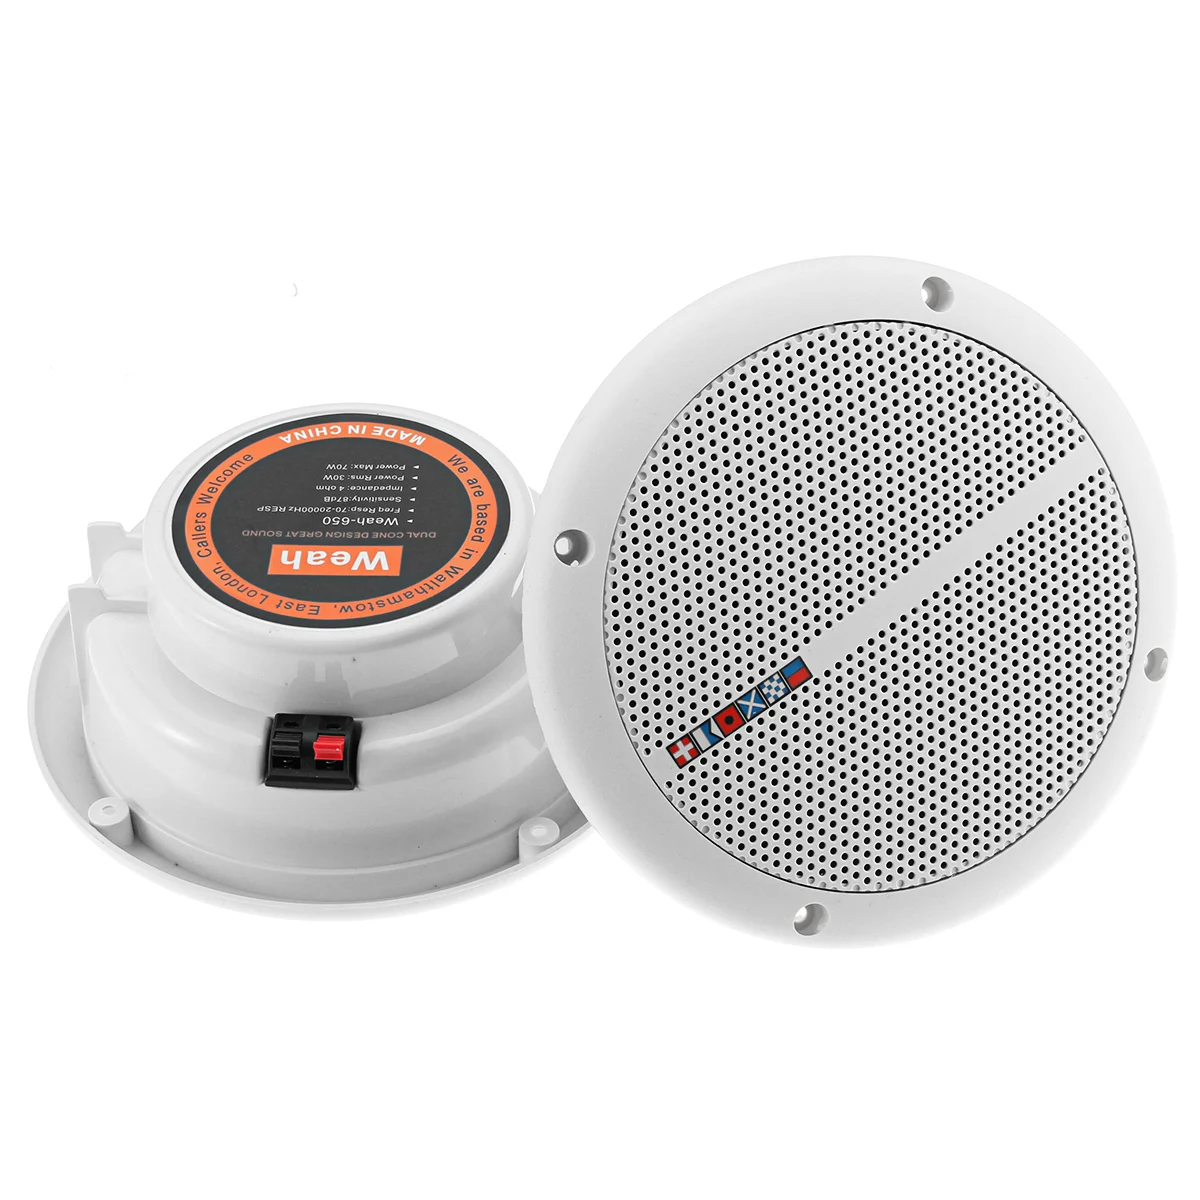 Us 19 31 40 Off 2pcs 70w 2 Way Outdoor Waterproof Ceiling Speakers For Home Bathroom Boat Yacht Speakers Audio Loundspeaker Stereo Music Player In